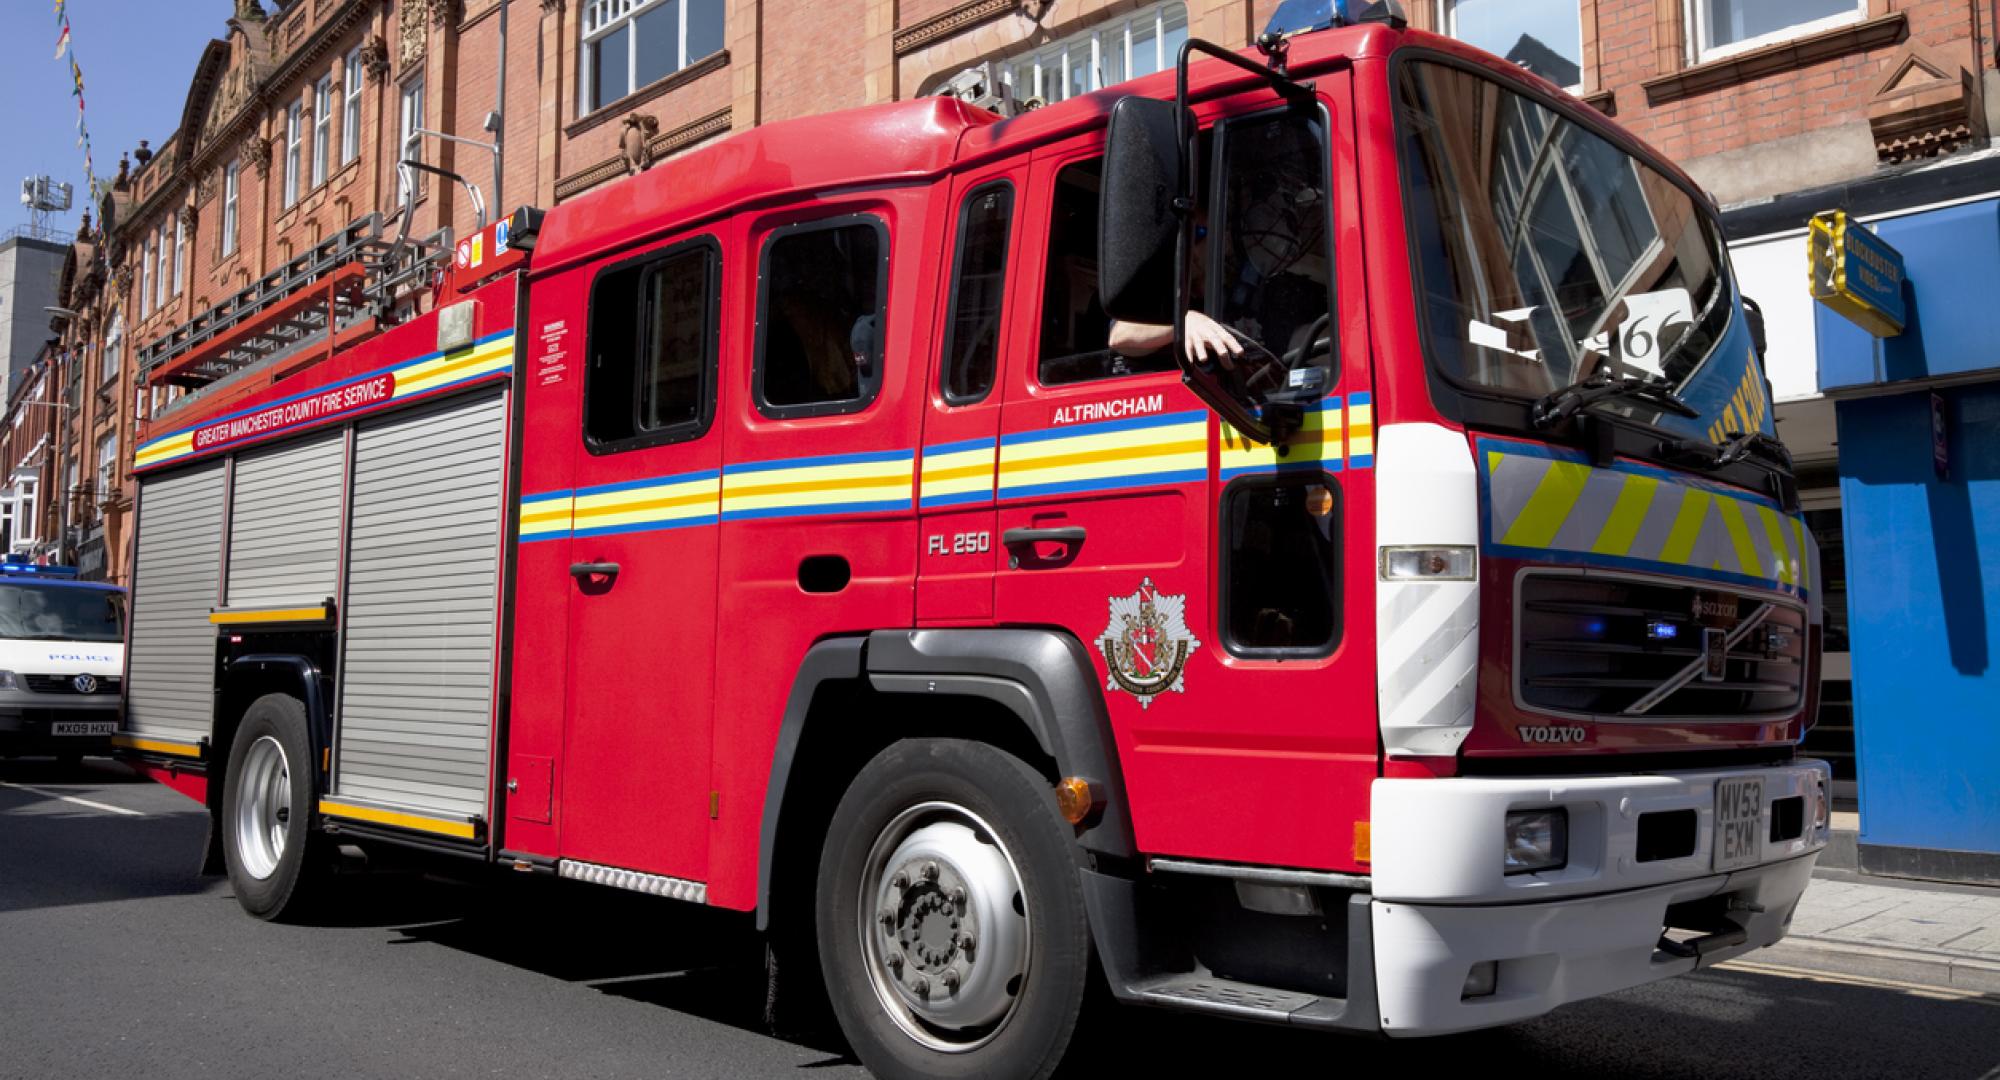 Fire engine in Altrincham town centre